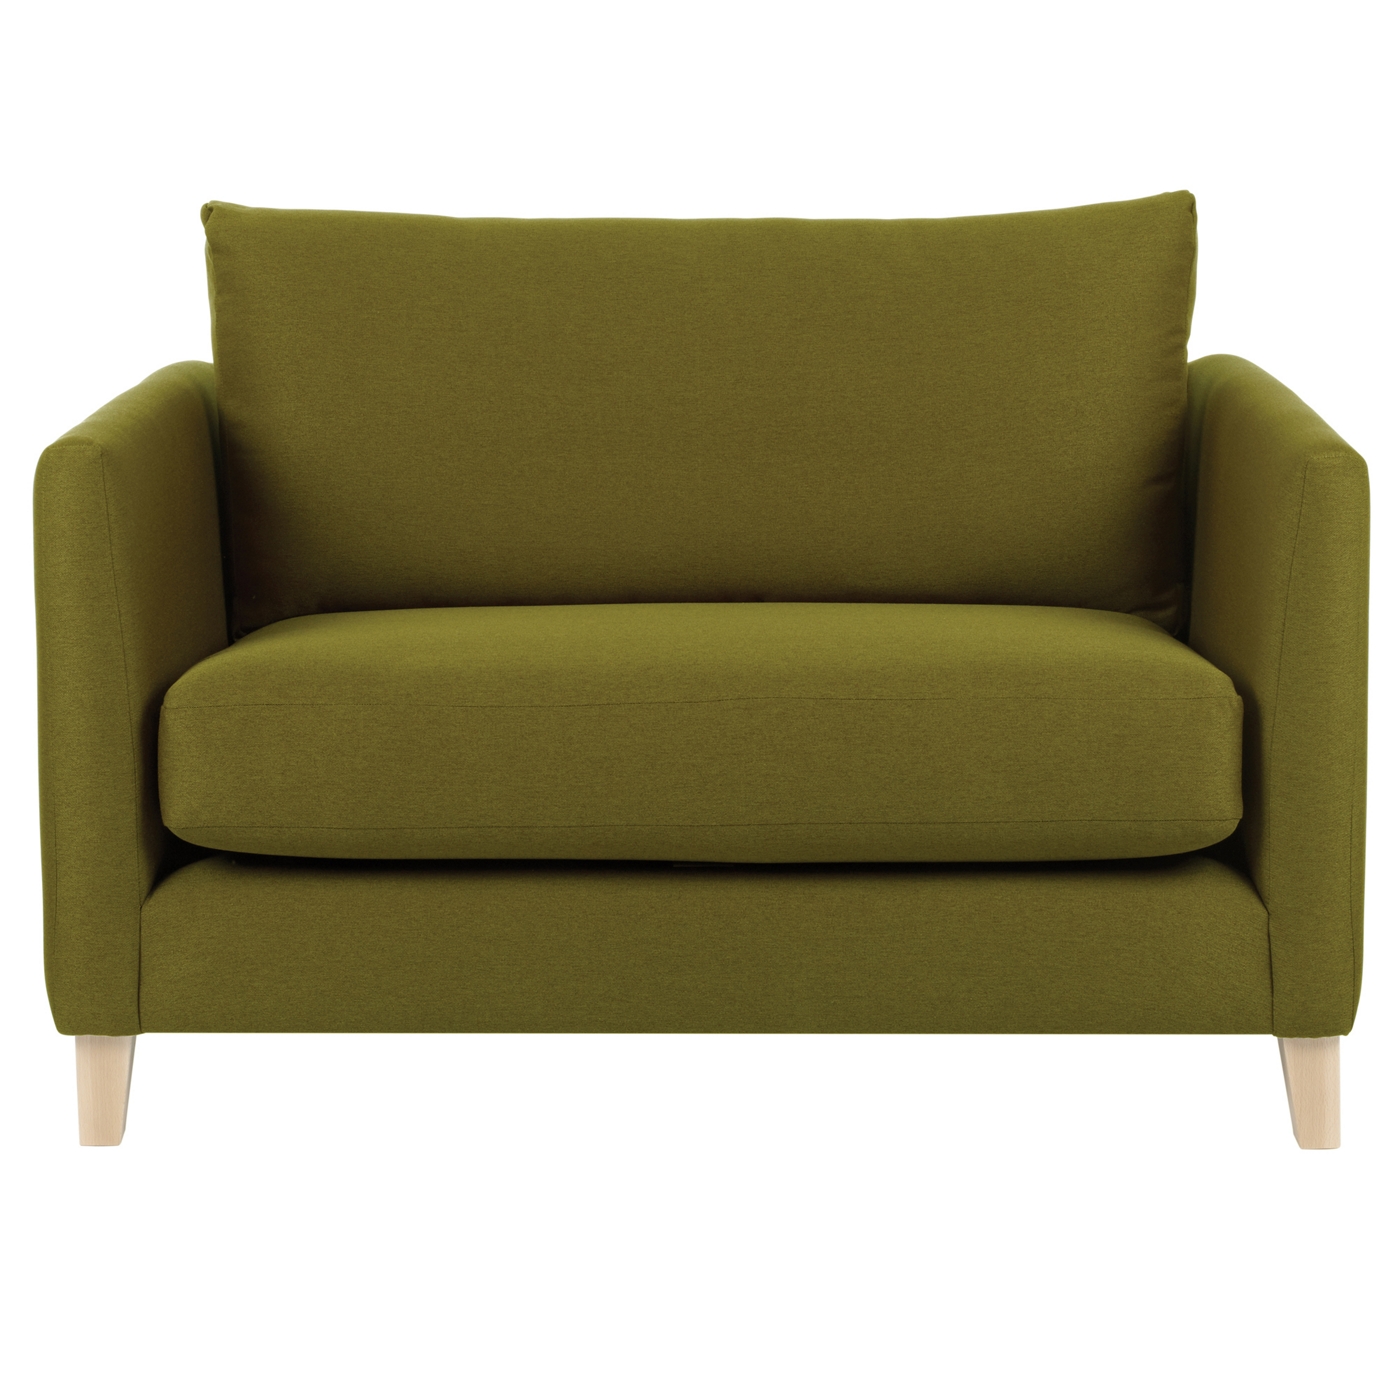 Green Dali snuggler chair with light wood feet